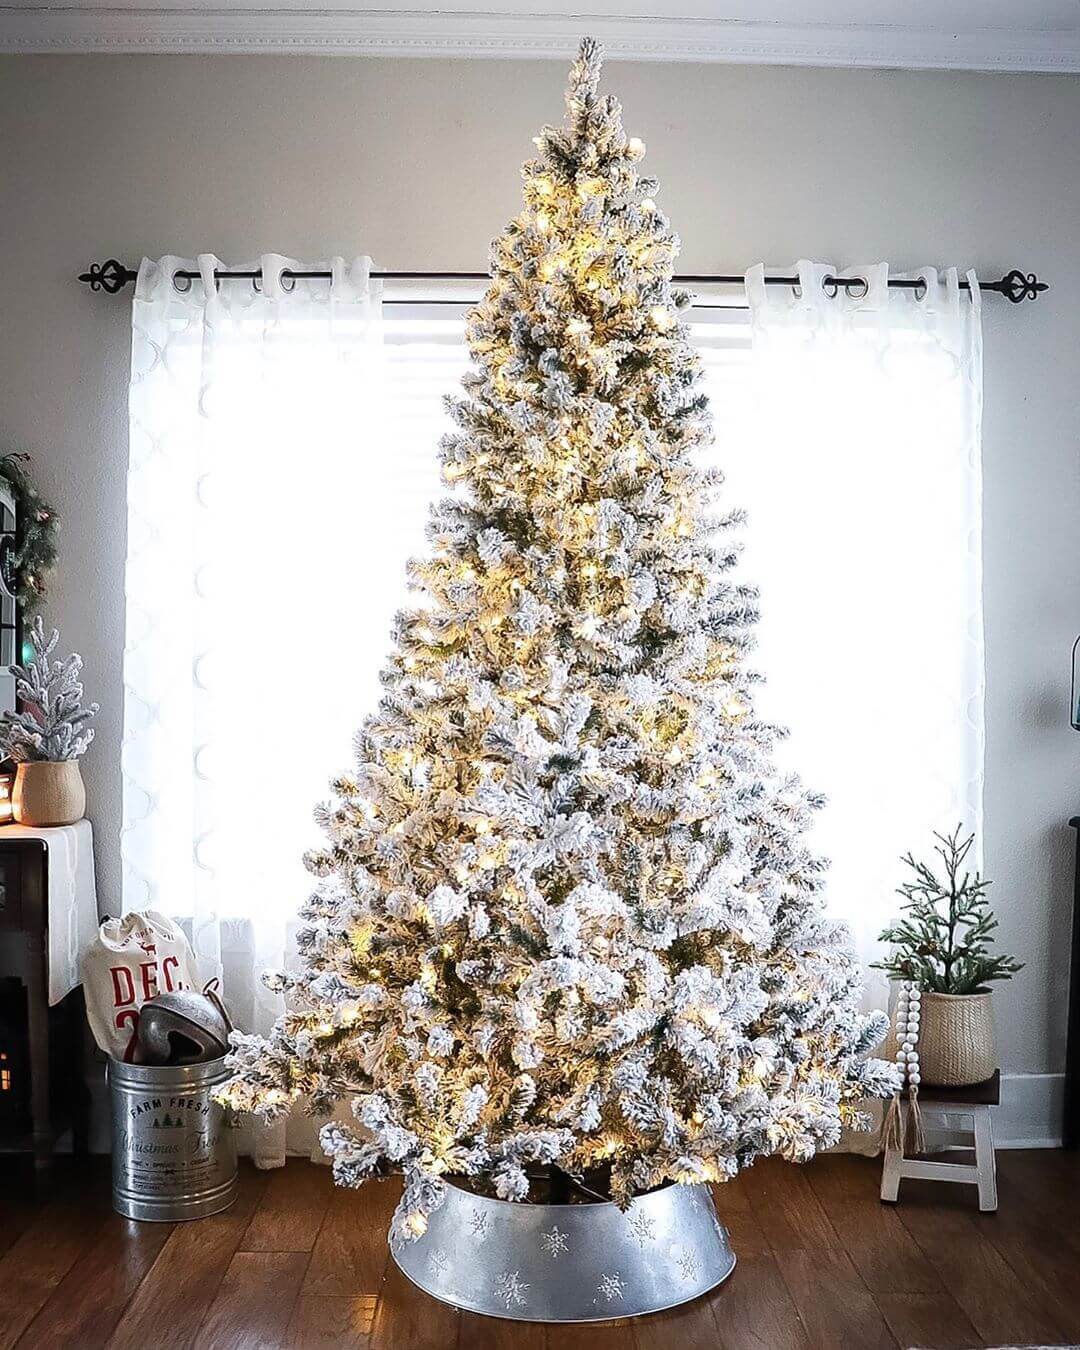 King of Christmas 6' Prince Flock® Artificial Christmas Tree with 350 Warm White LED Lights